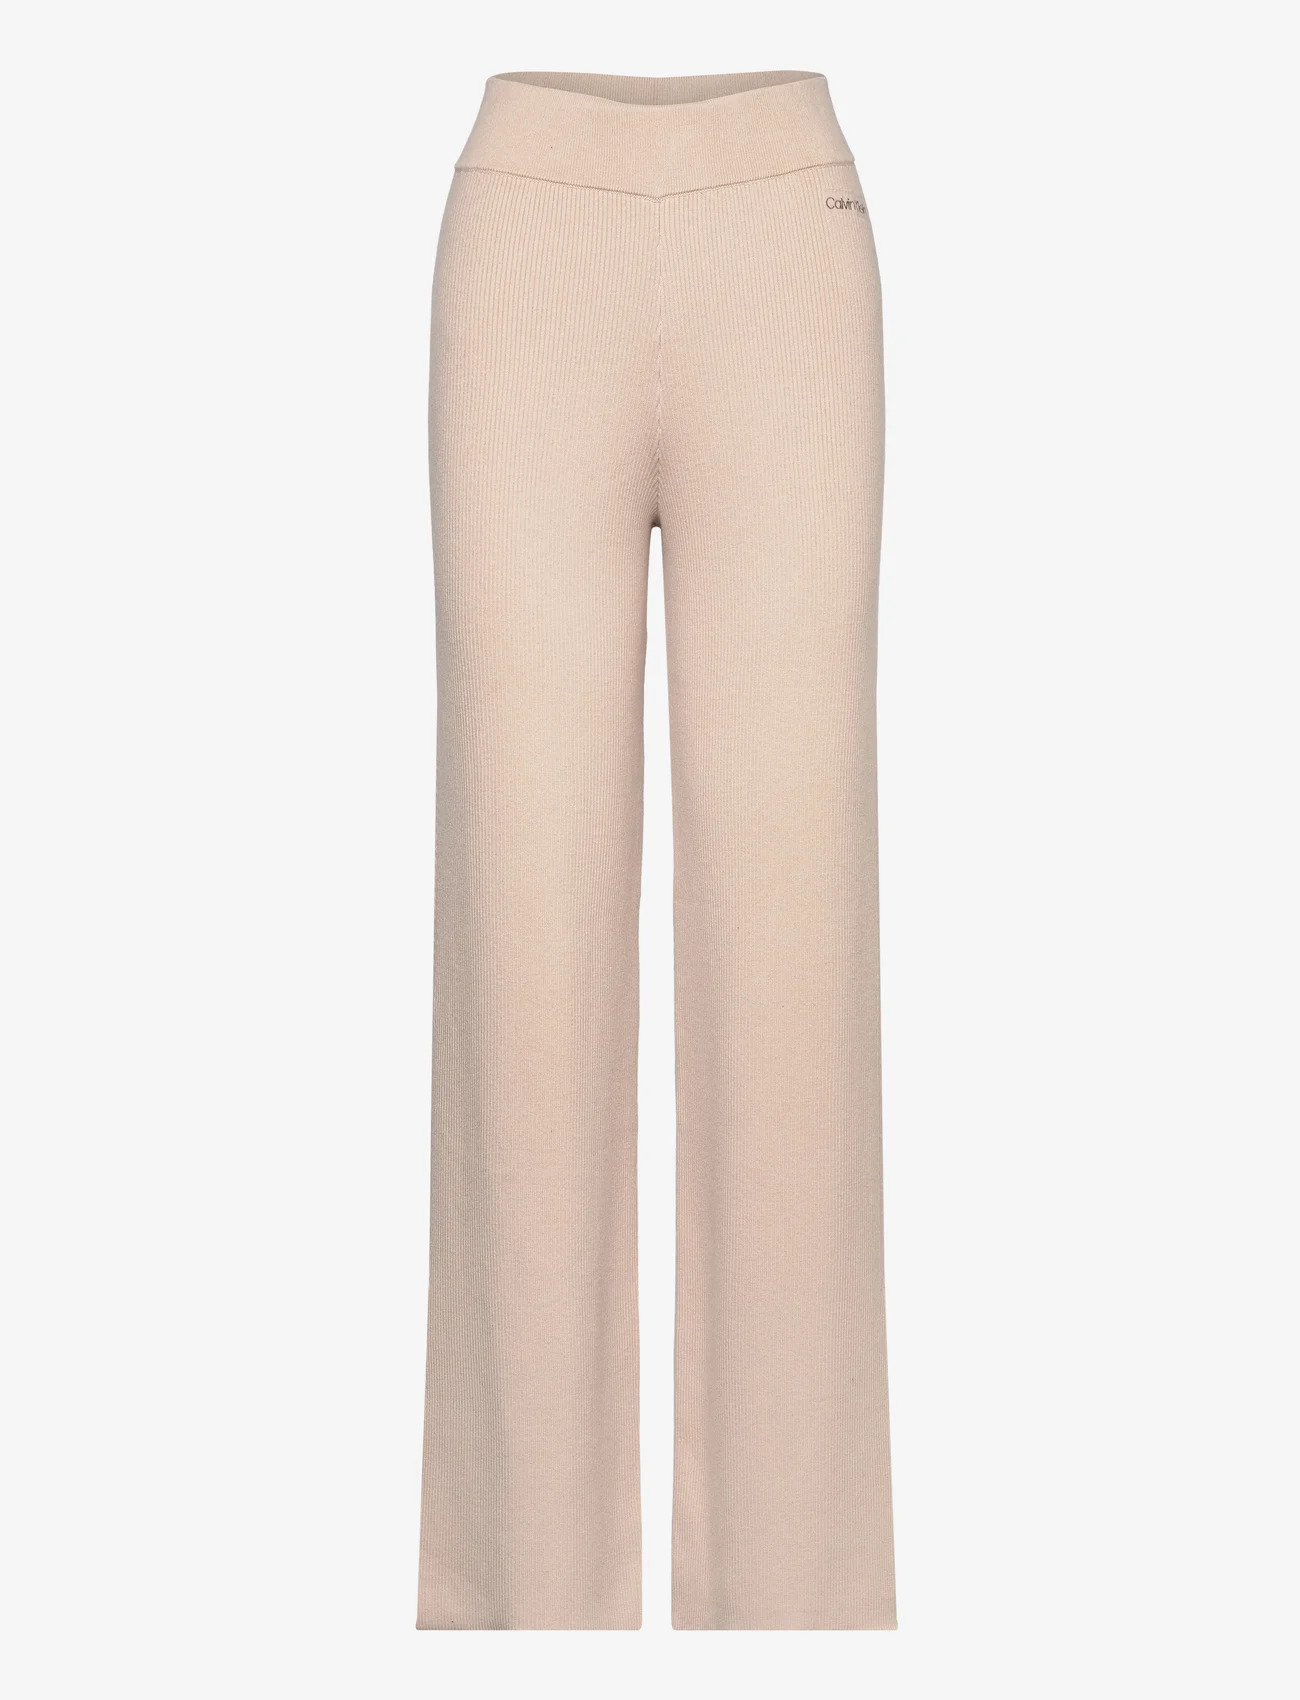 Calvin Klein - ESSENTIAL RIB WIDE LEG PANT - spodnie szerokie - doeskin - 0